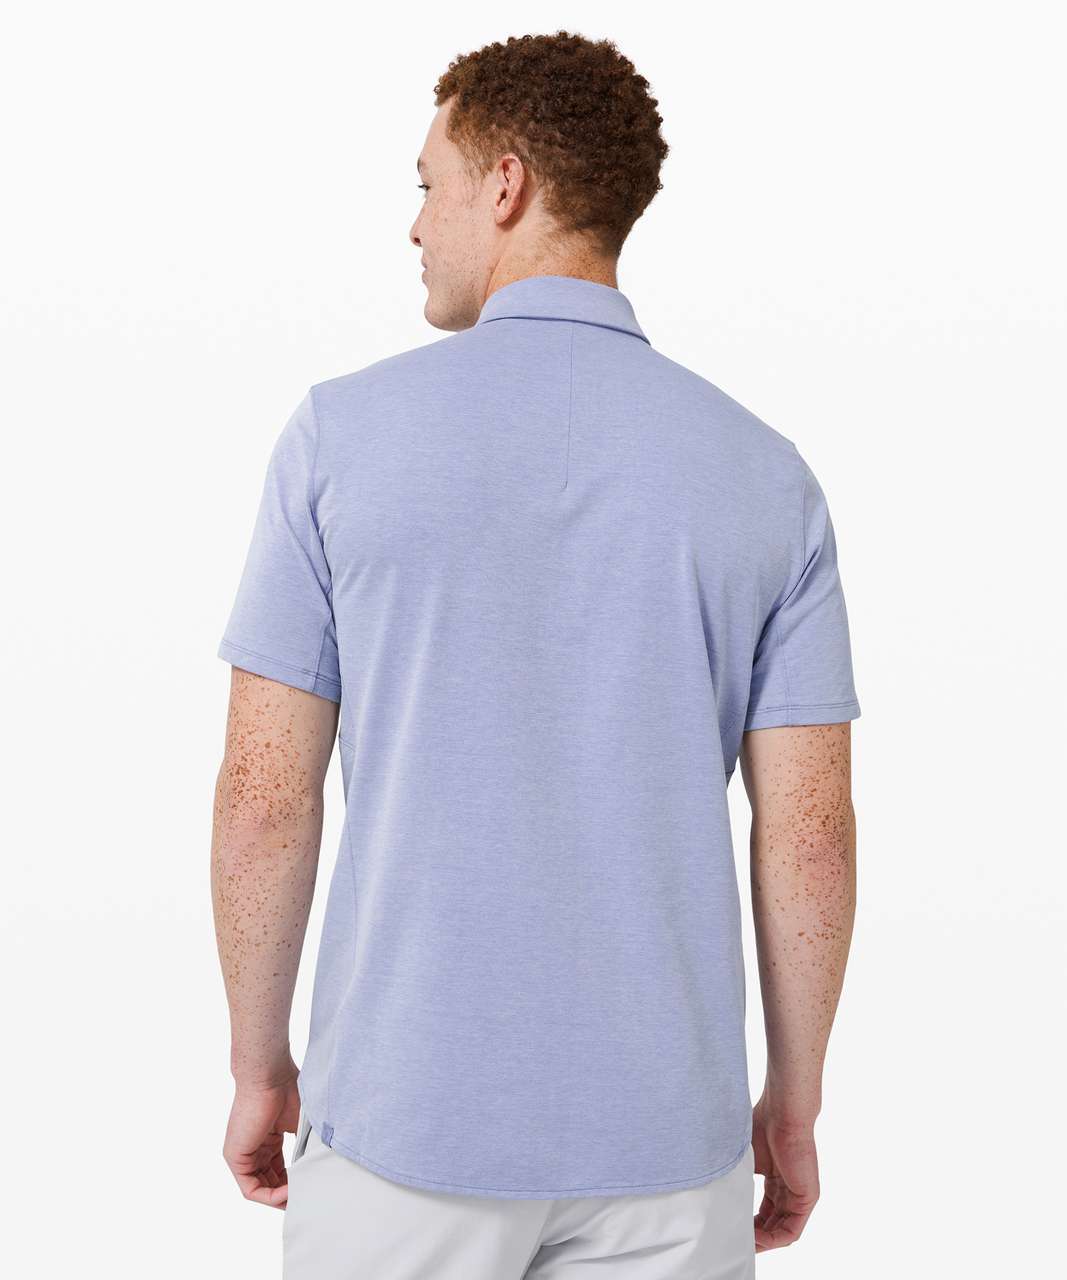 Lululemon Commission Short Sleeve Shirt - Harbor Blue / White (First Release)